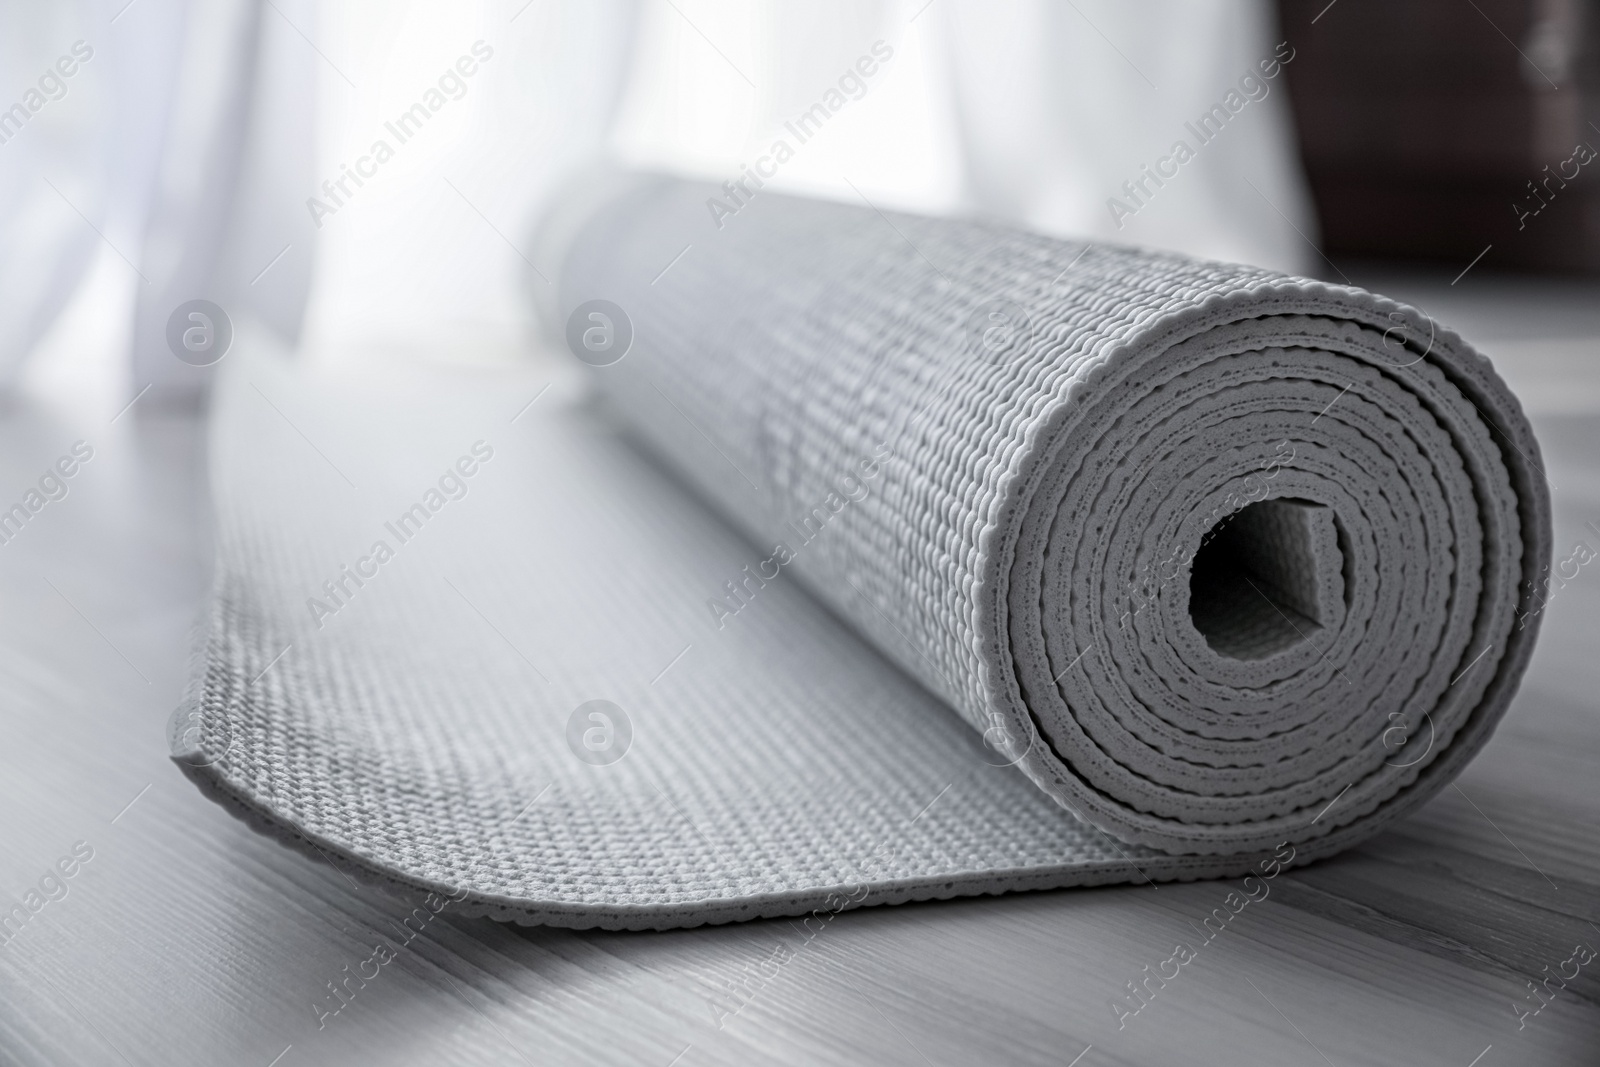 Photo of Karemat or fitness mat on floor, closeup